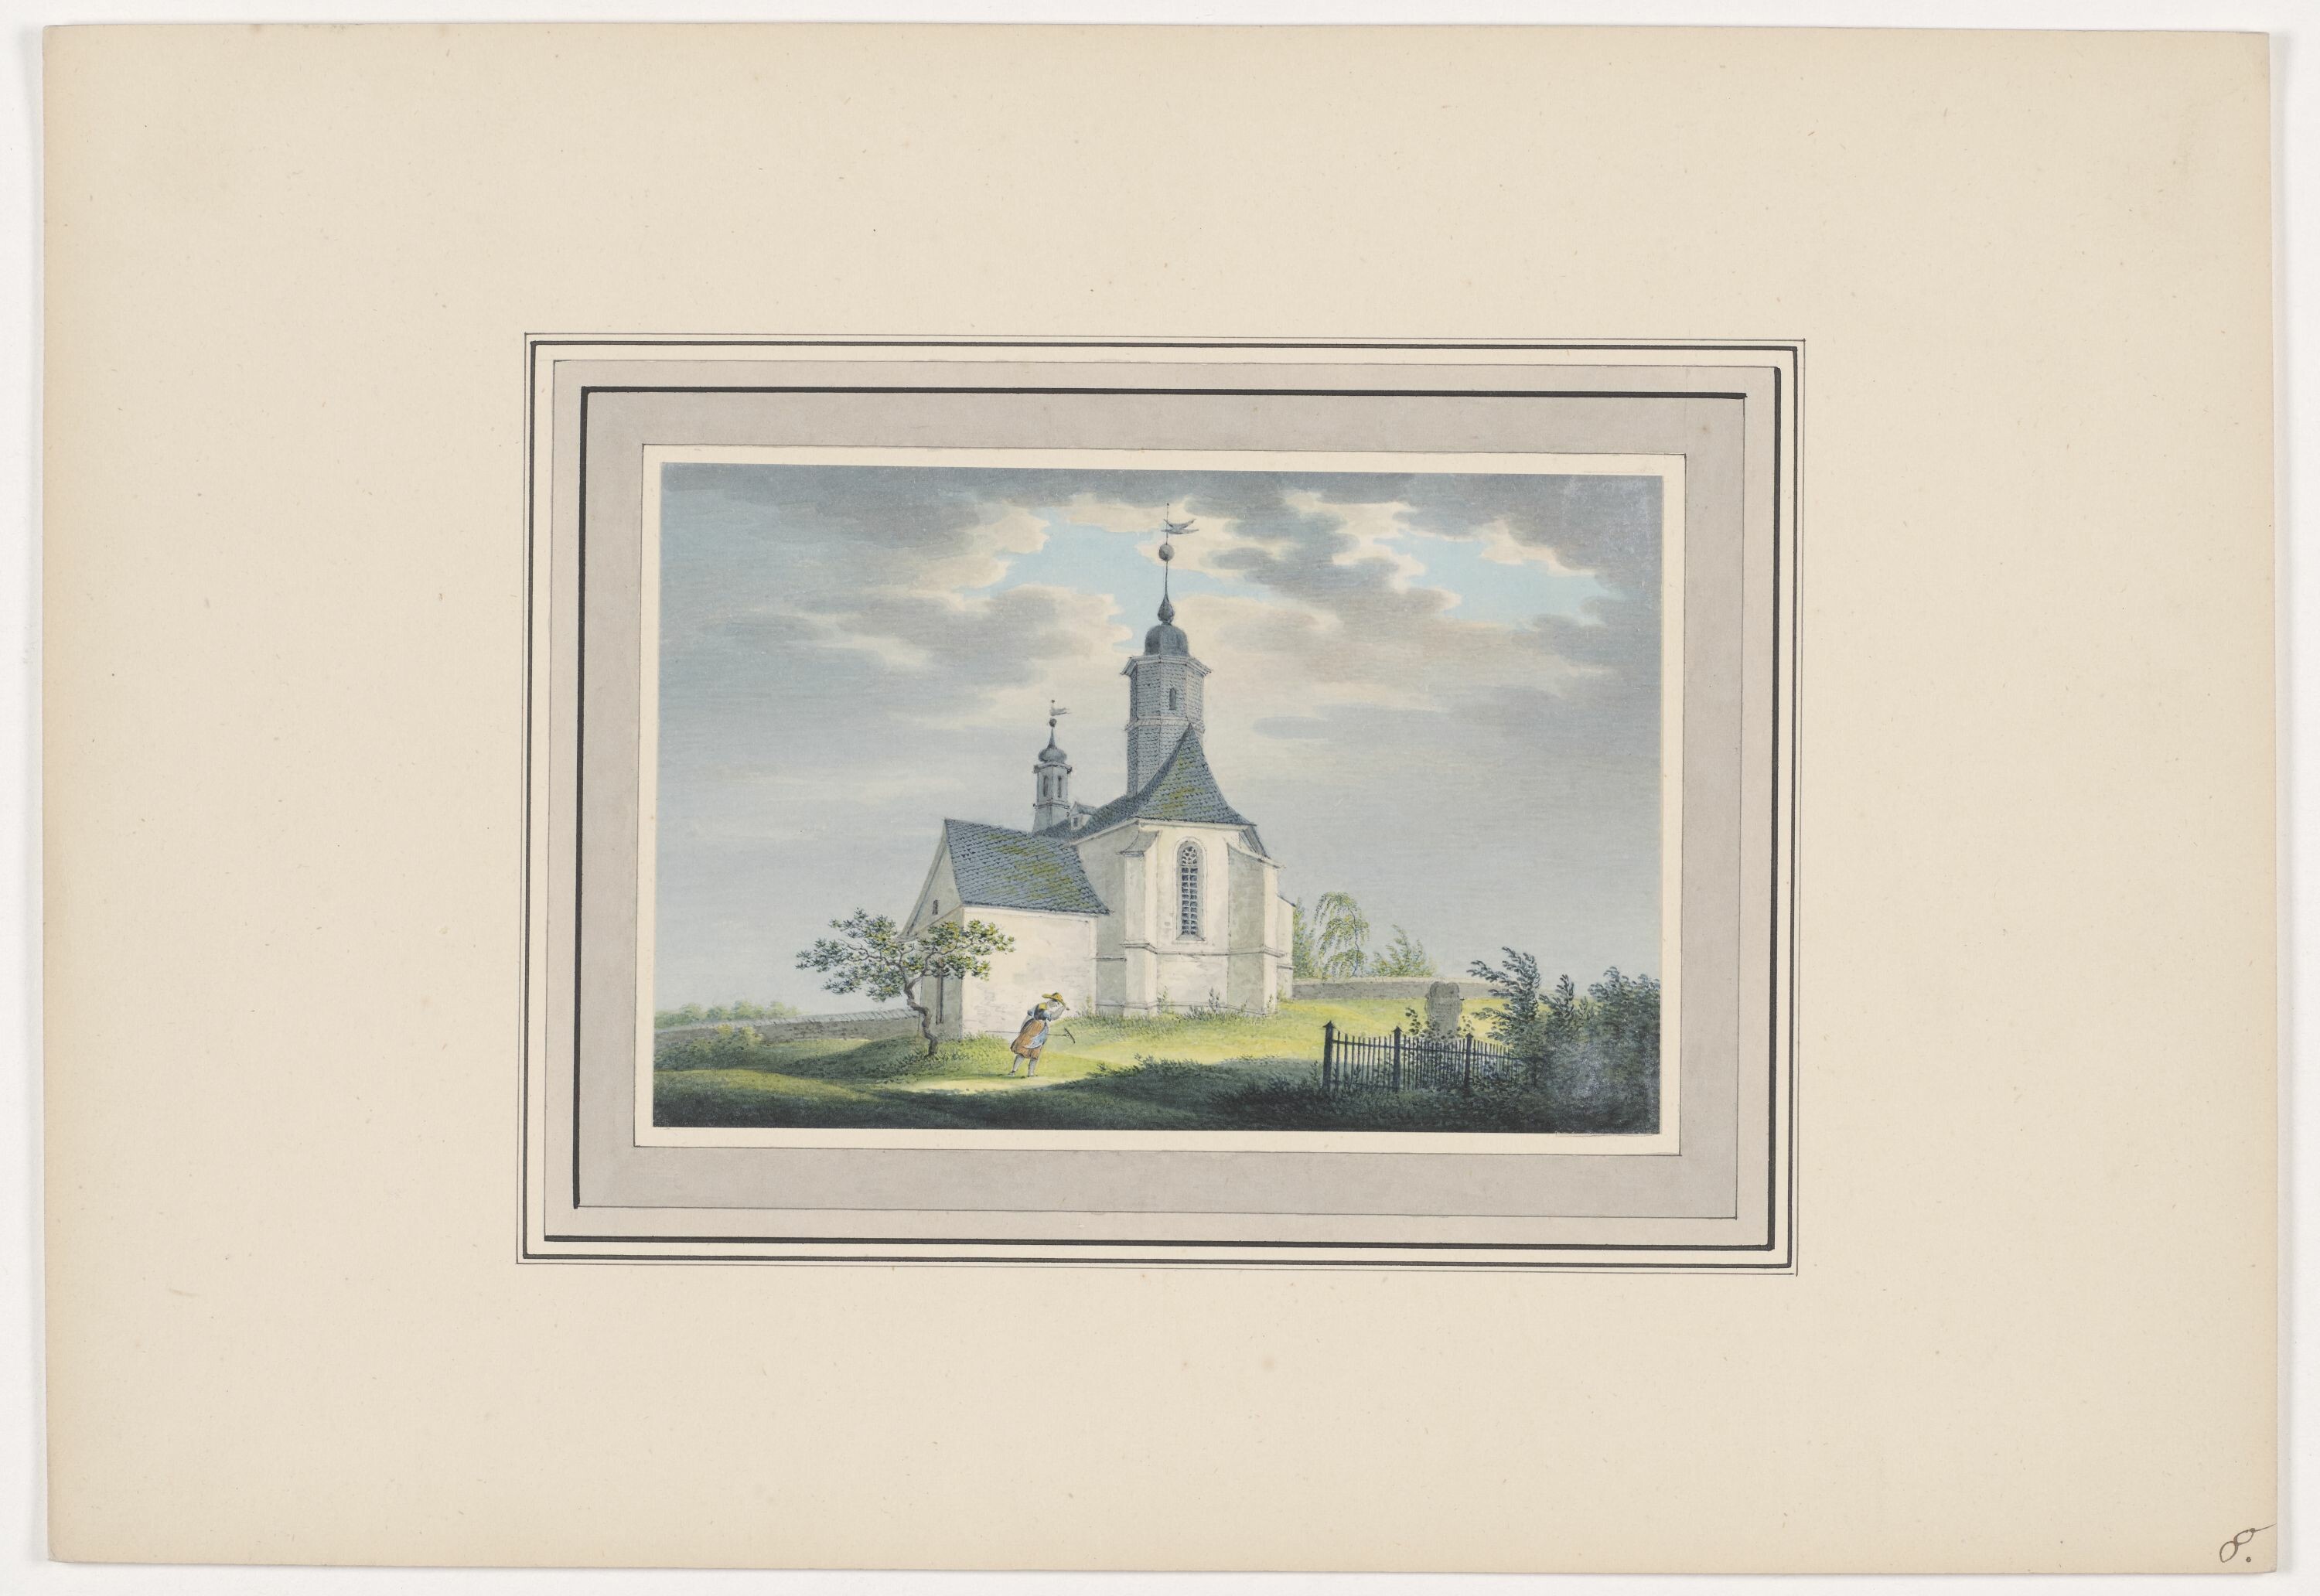 Kirche zu Ruppertsgrün, aus Mappe: Dorfkirchen der Ephorie Zwickau, Blatt 8 (KUNSTSAMMLUNGEN ZWICKAU Max-Pechstein-Museum RR-F)